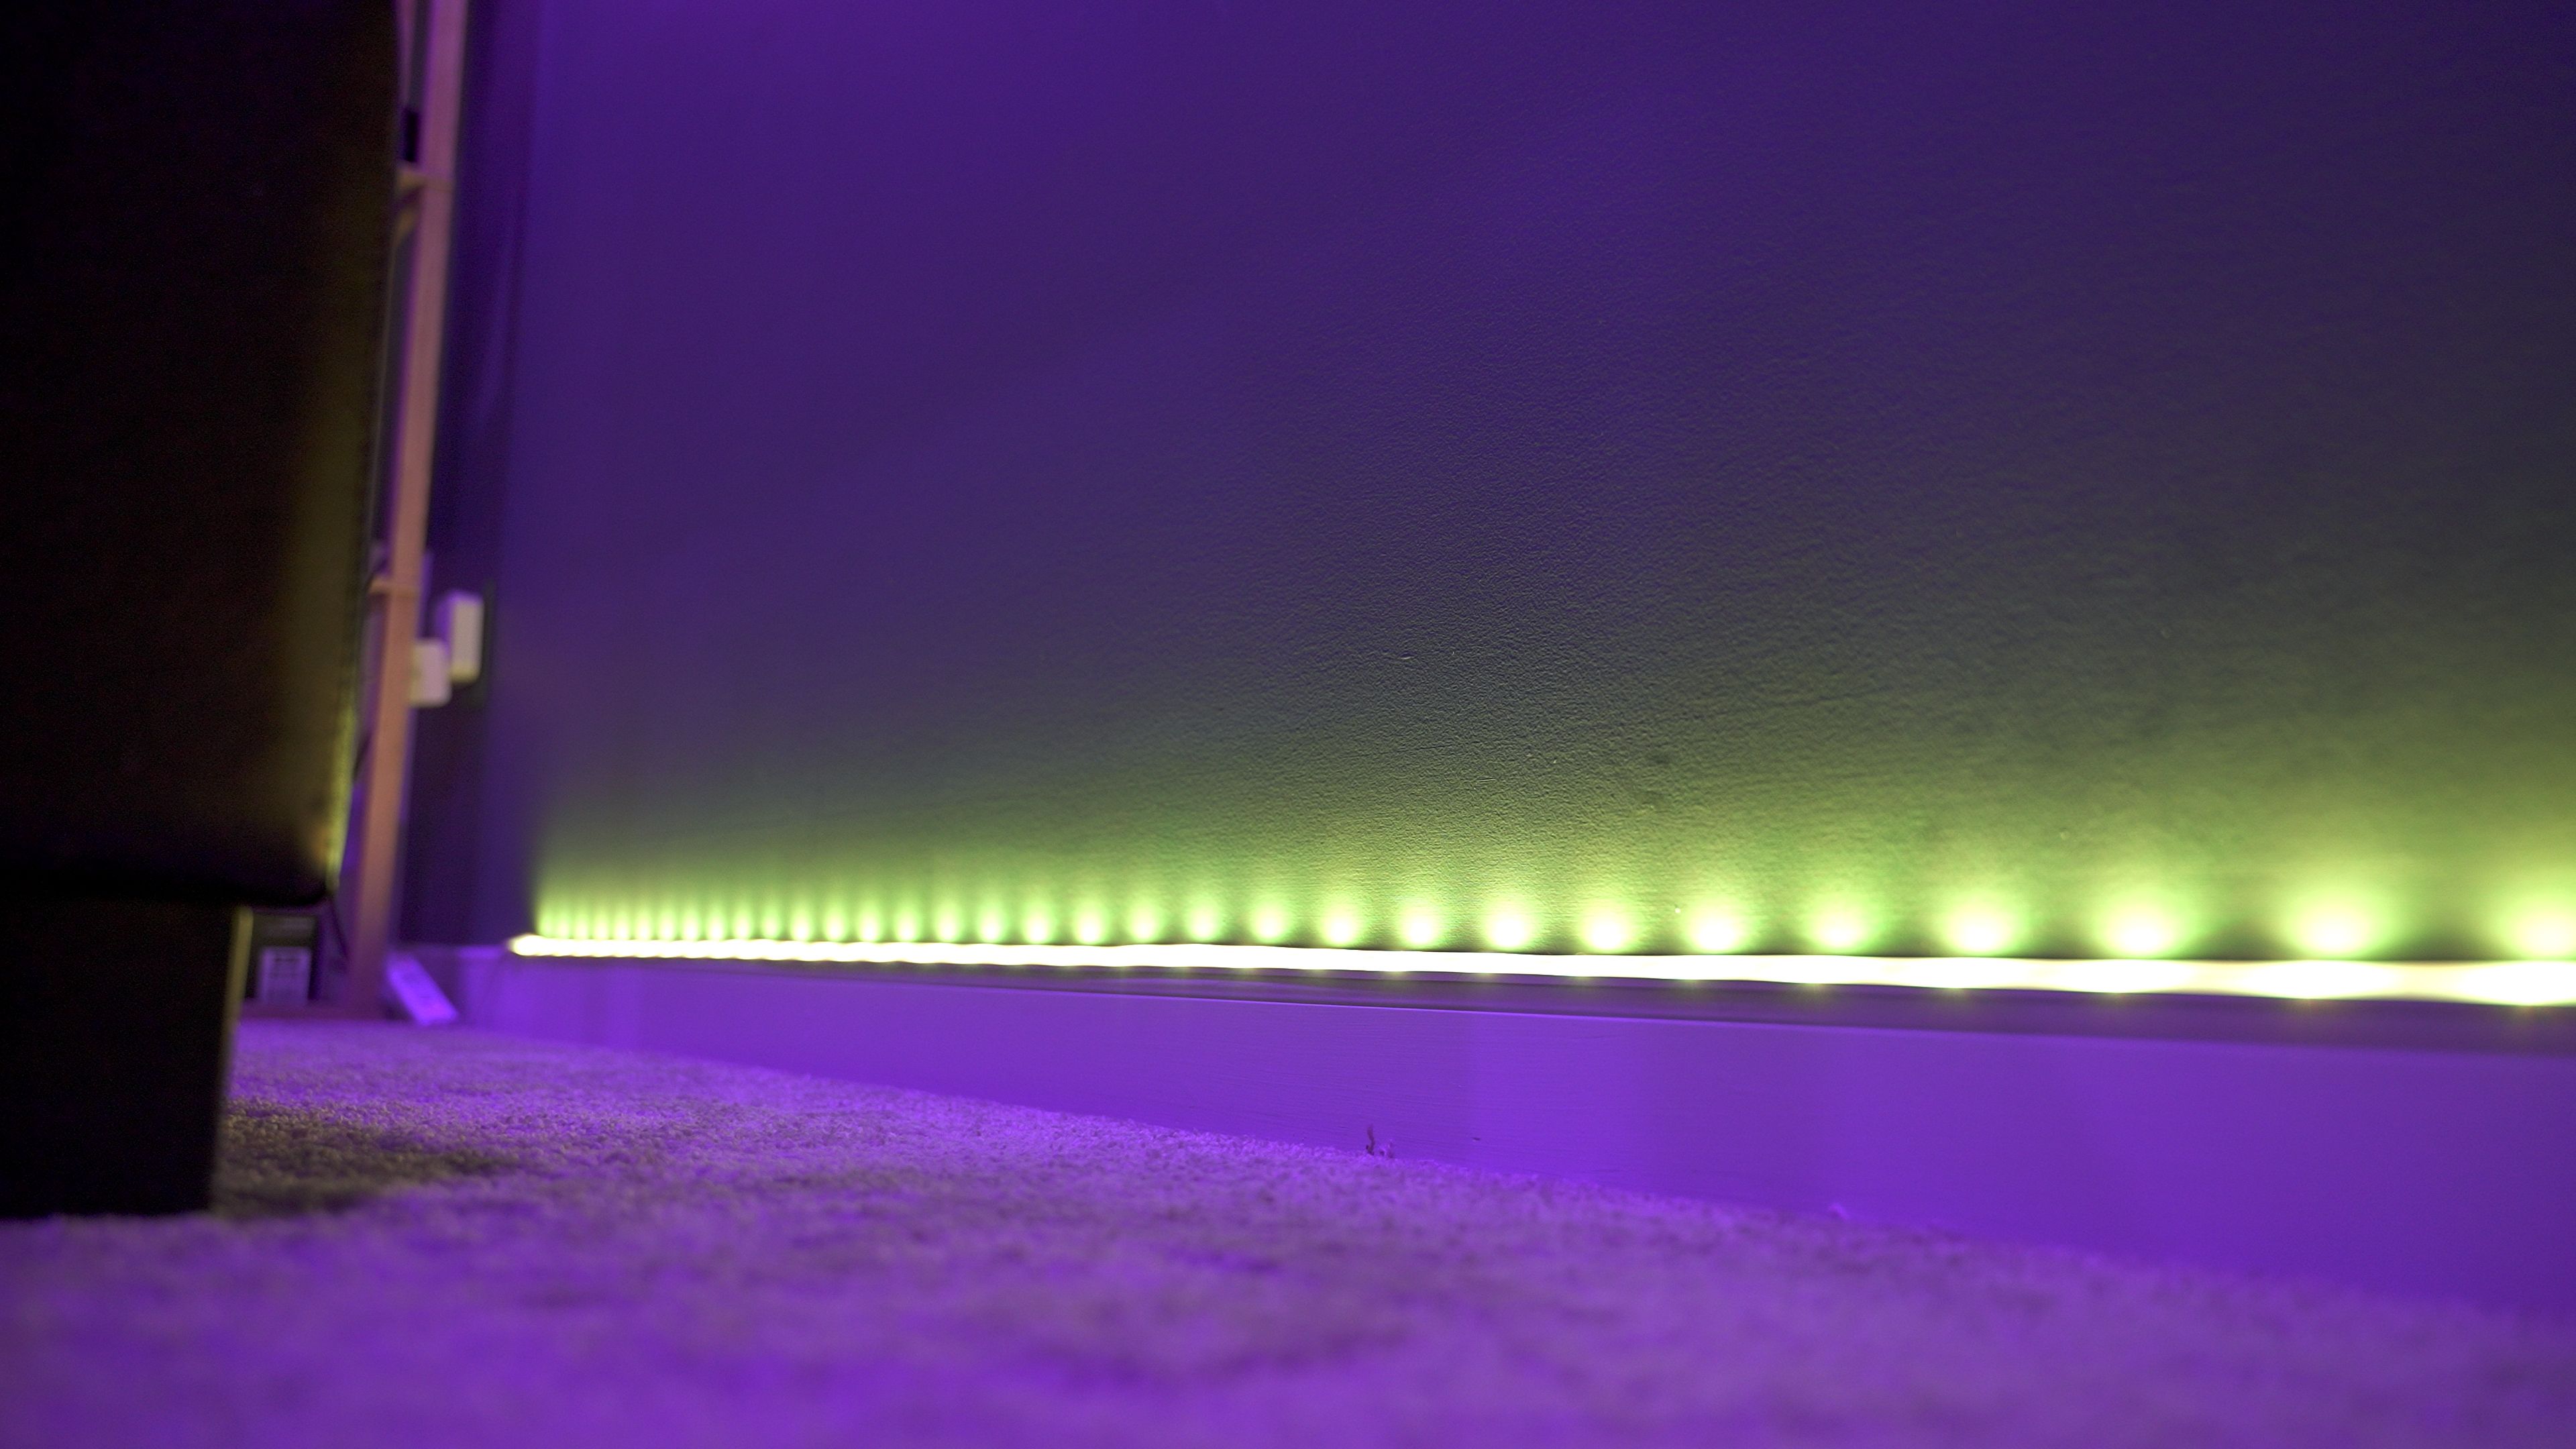 GE Cync - LED light strip on baseboard